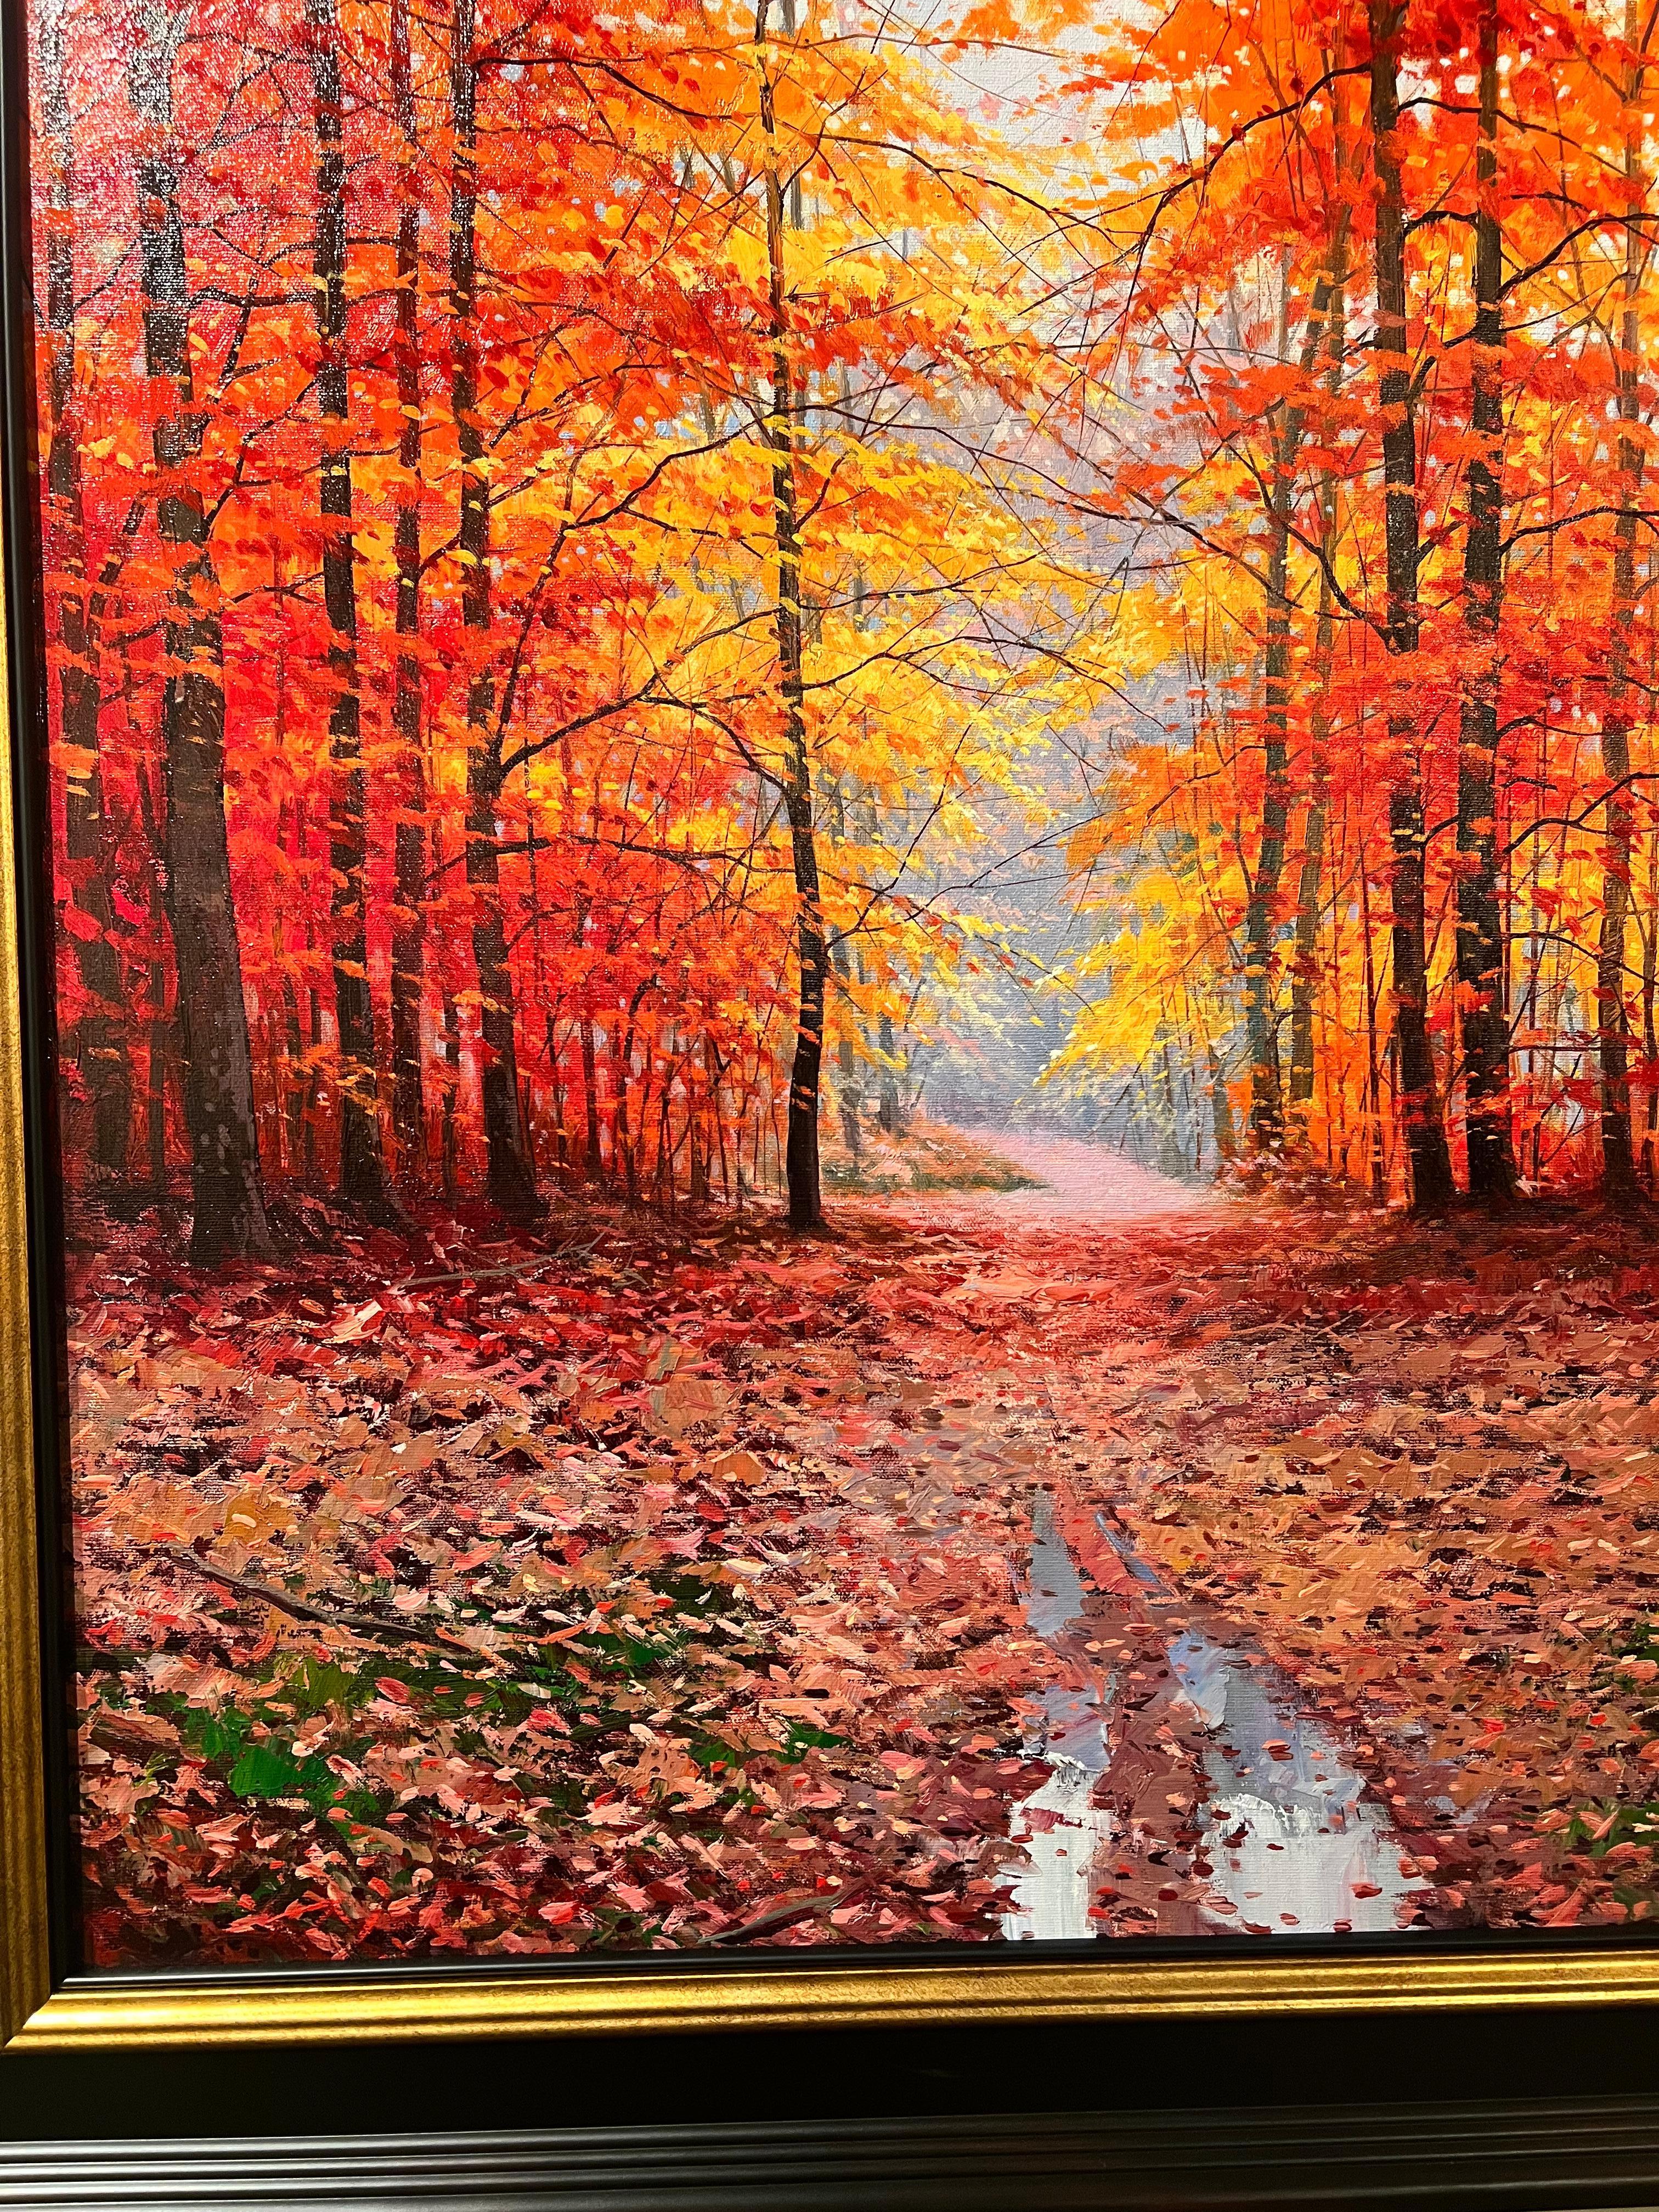 Frondosidad Otonal (Autumn Lushness) - Impressionist Painting by Miguel Peidro